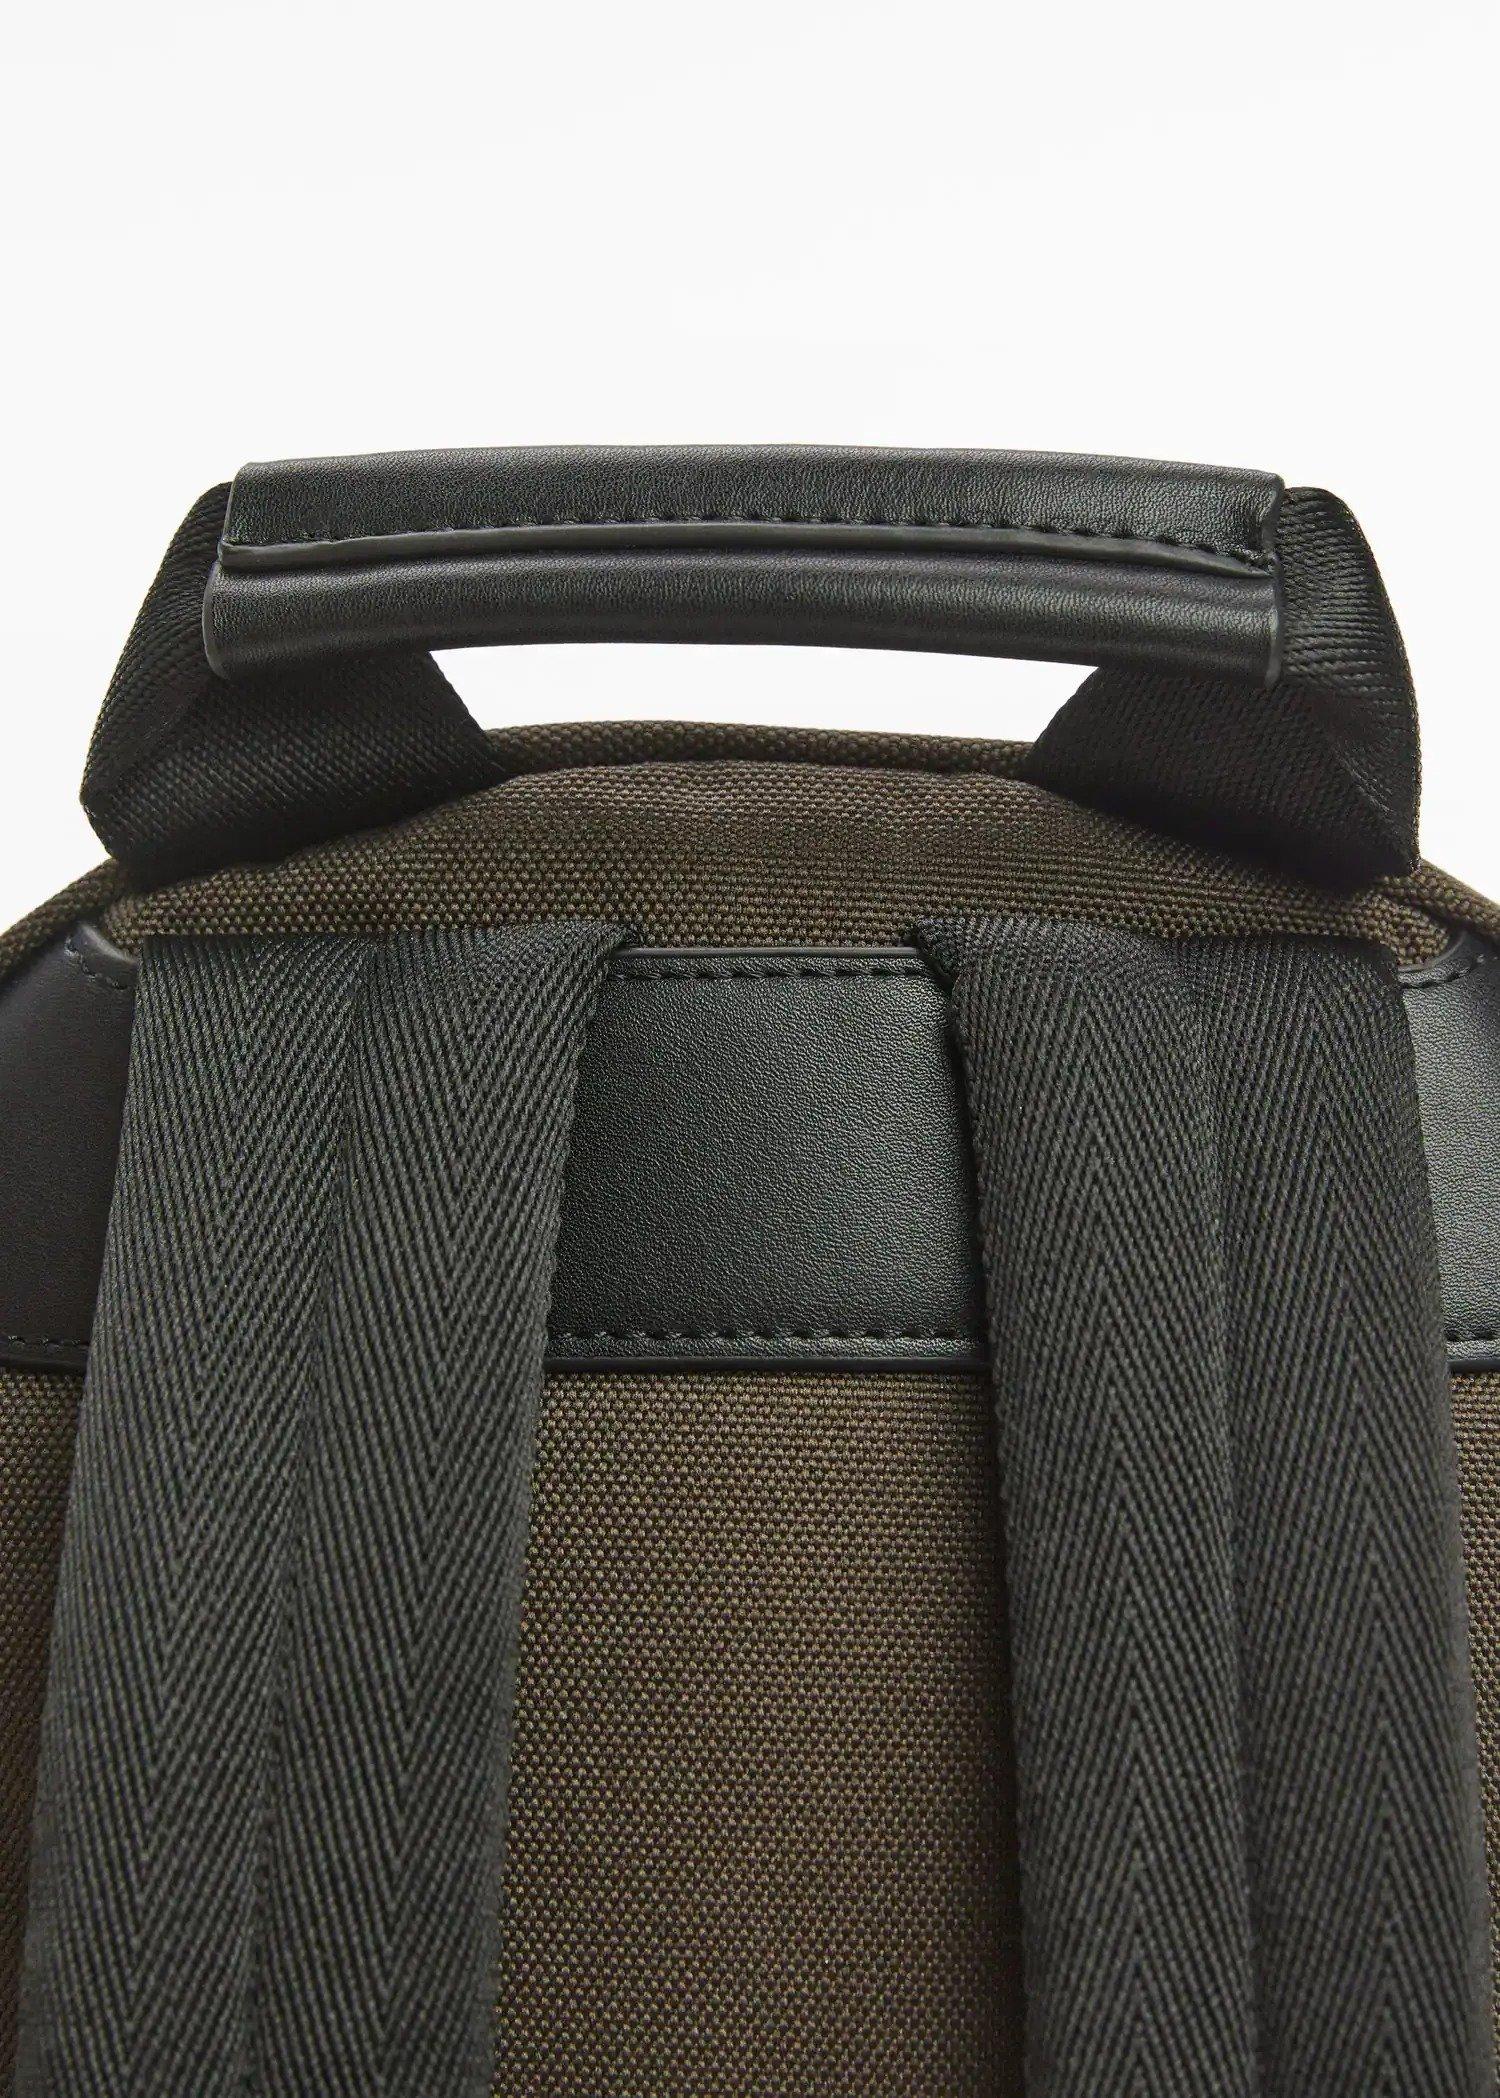 Mango - Khaki Backpack With Leather-Effect Details